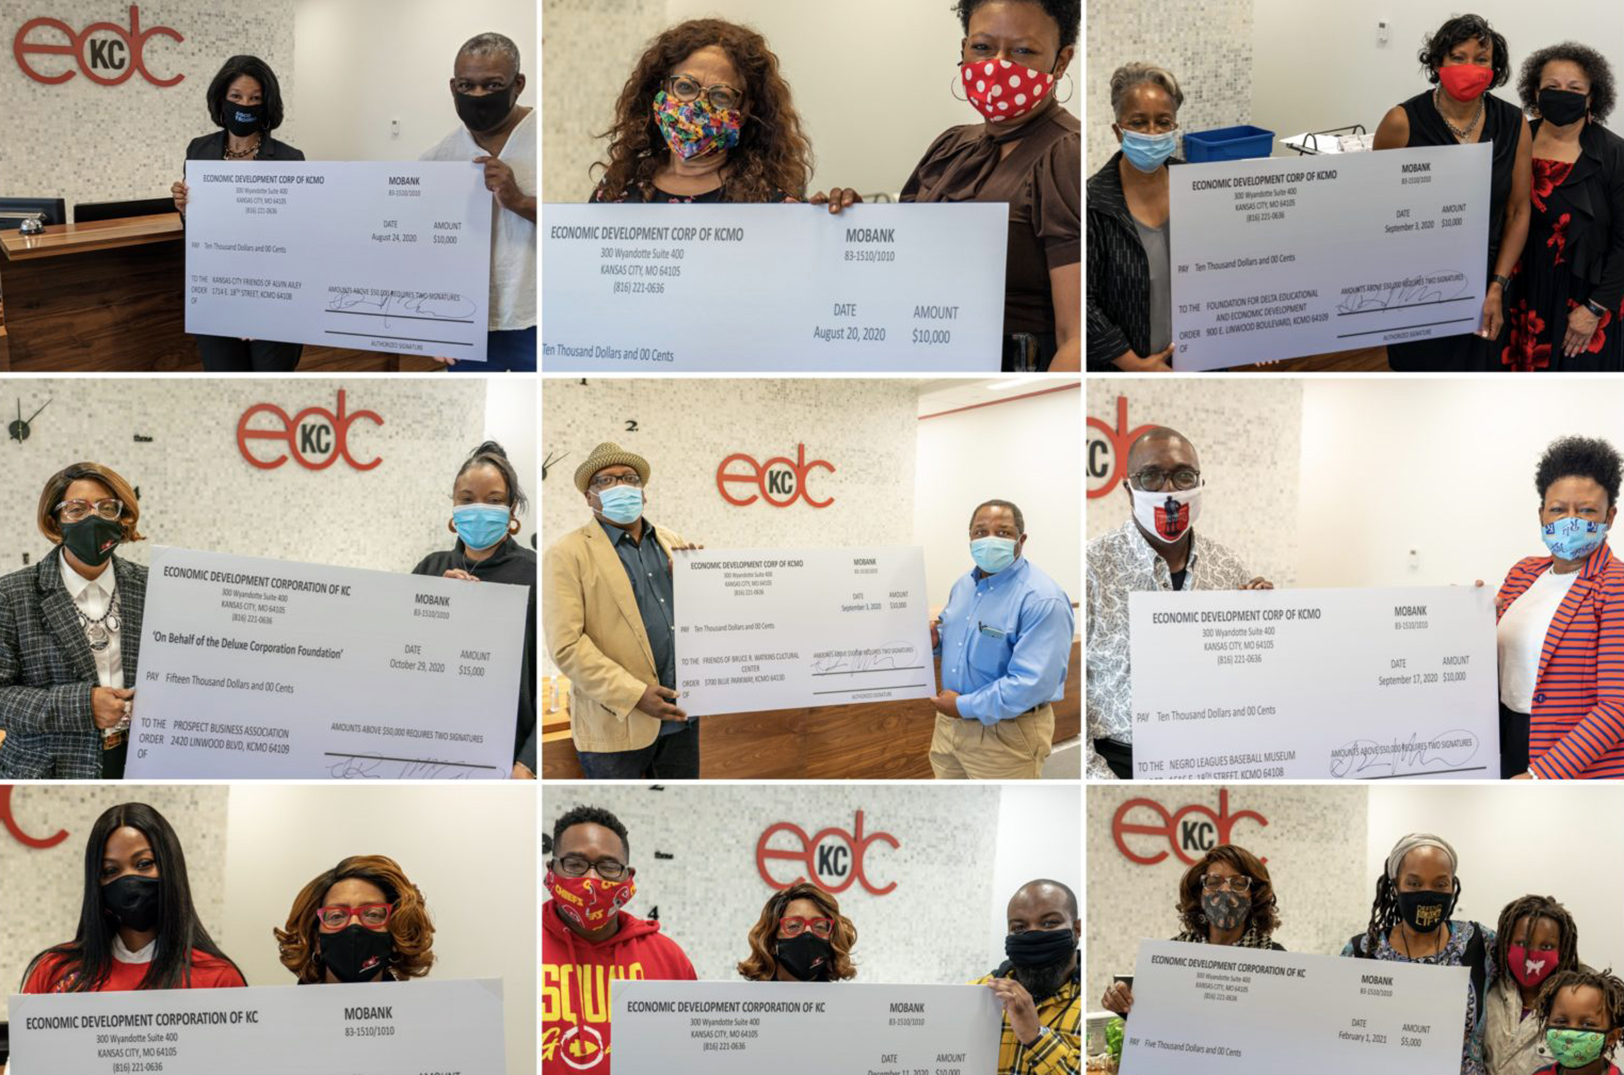 ‘A critical lifeline’: EDCKC grants $80K to Black-led non-profits impacted by COVID-19